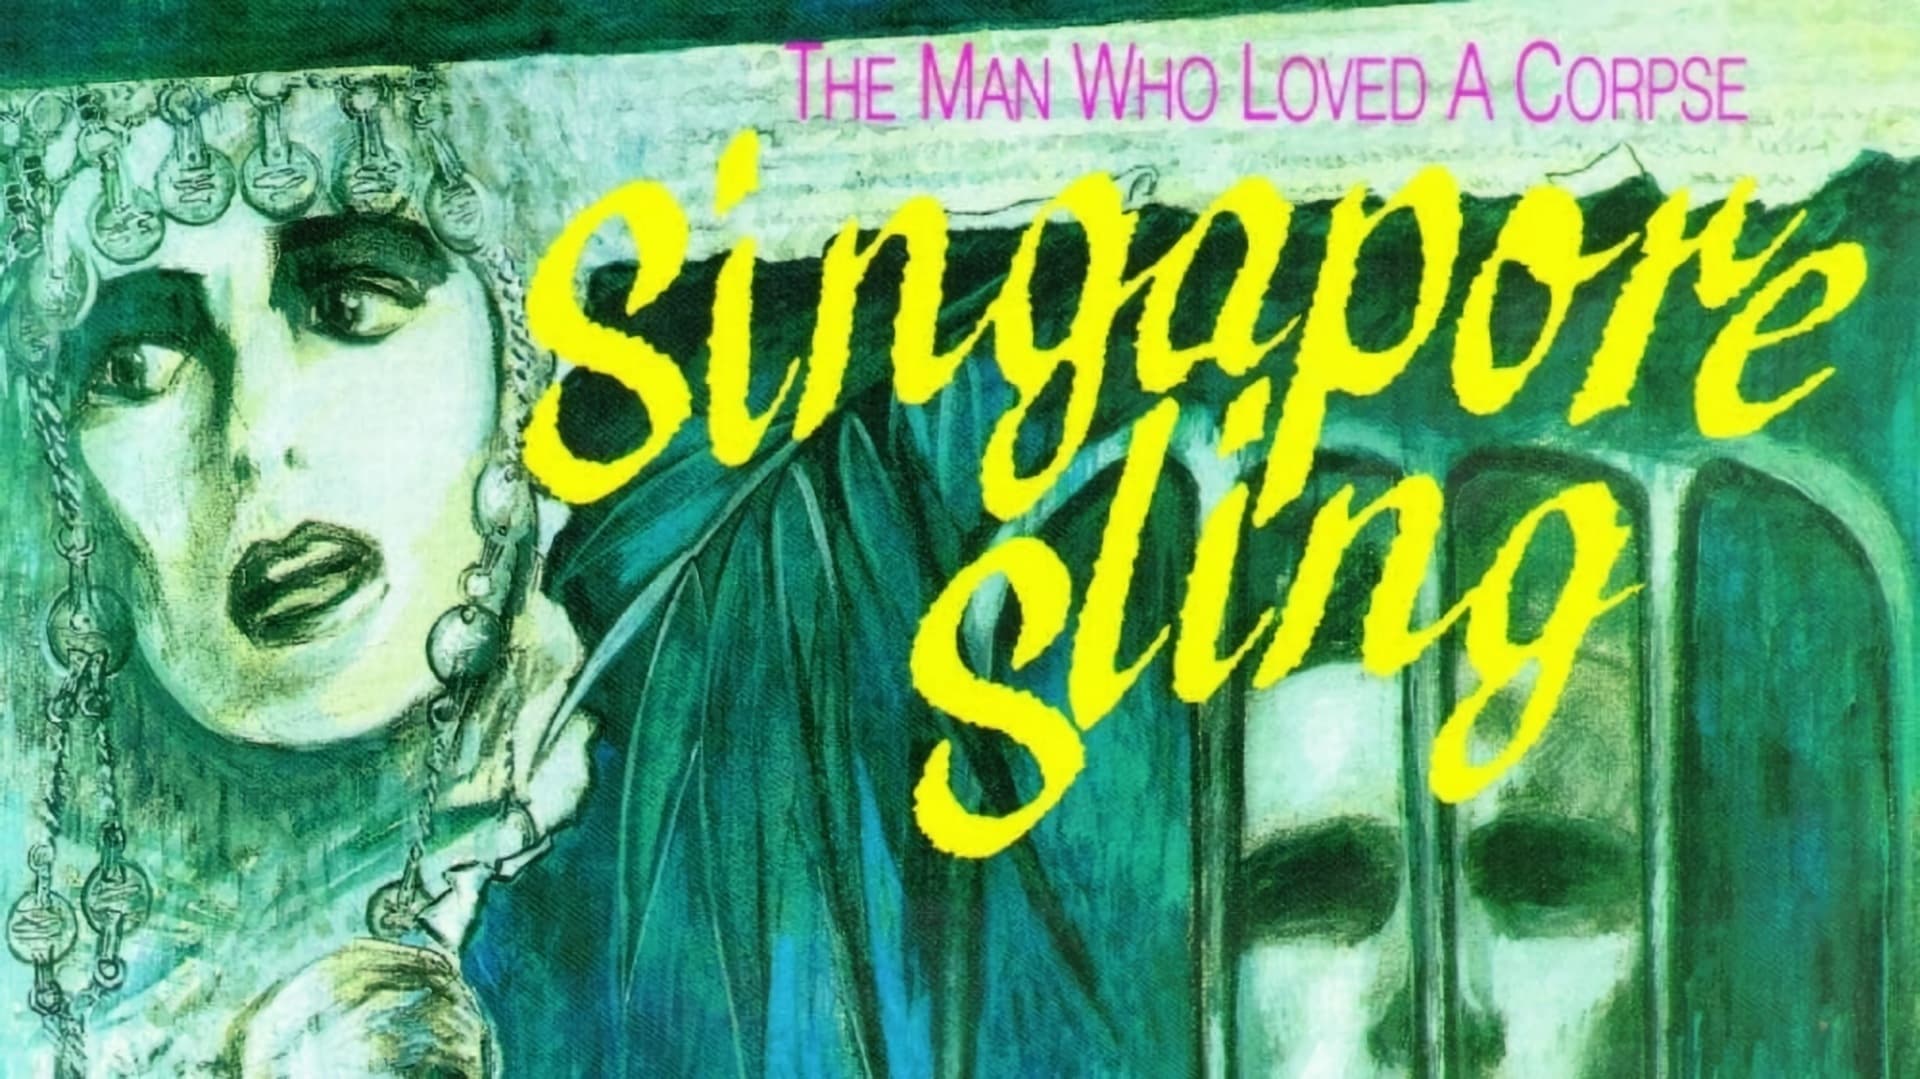 Singapore Sling: Ο άνθρωπος που αγάπησε ένα πτώμα